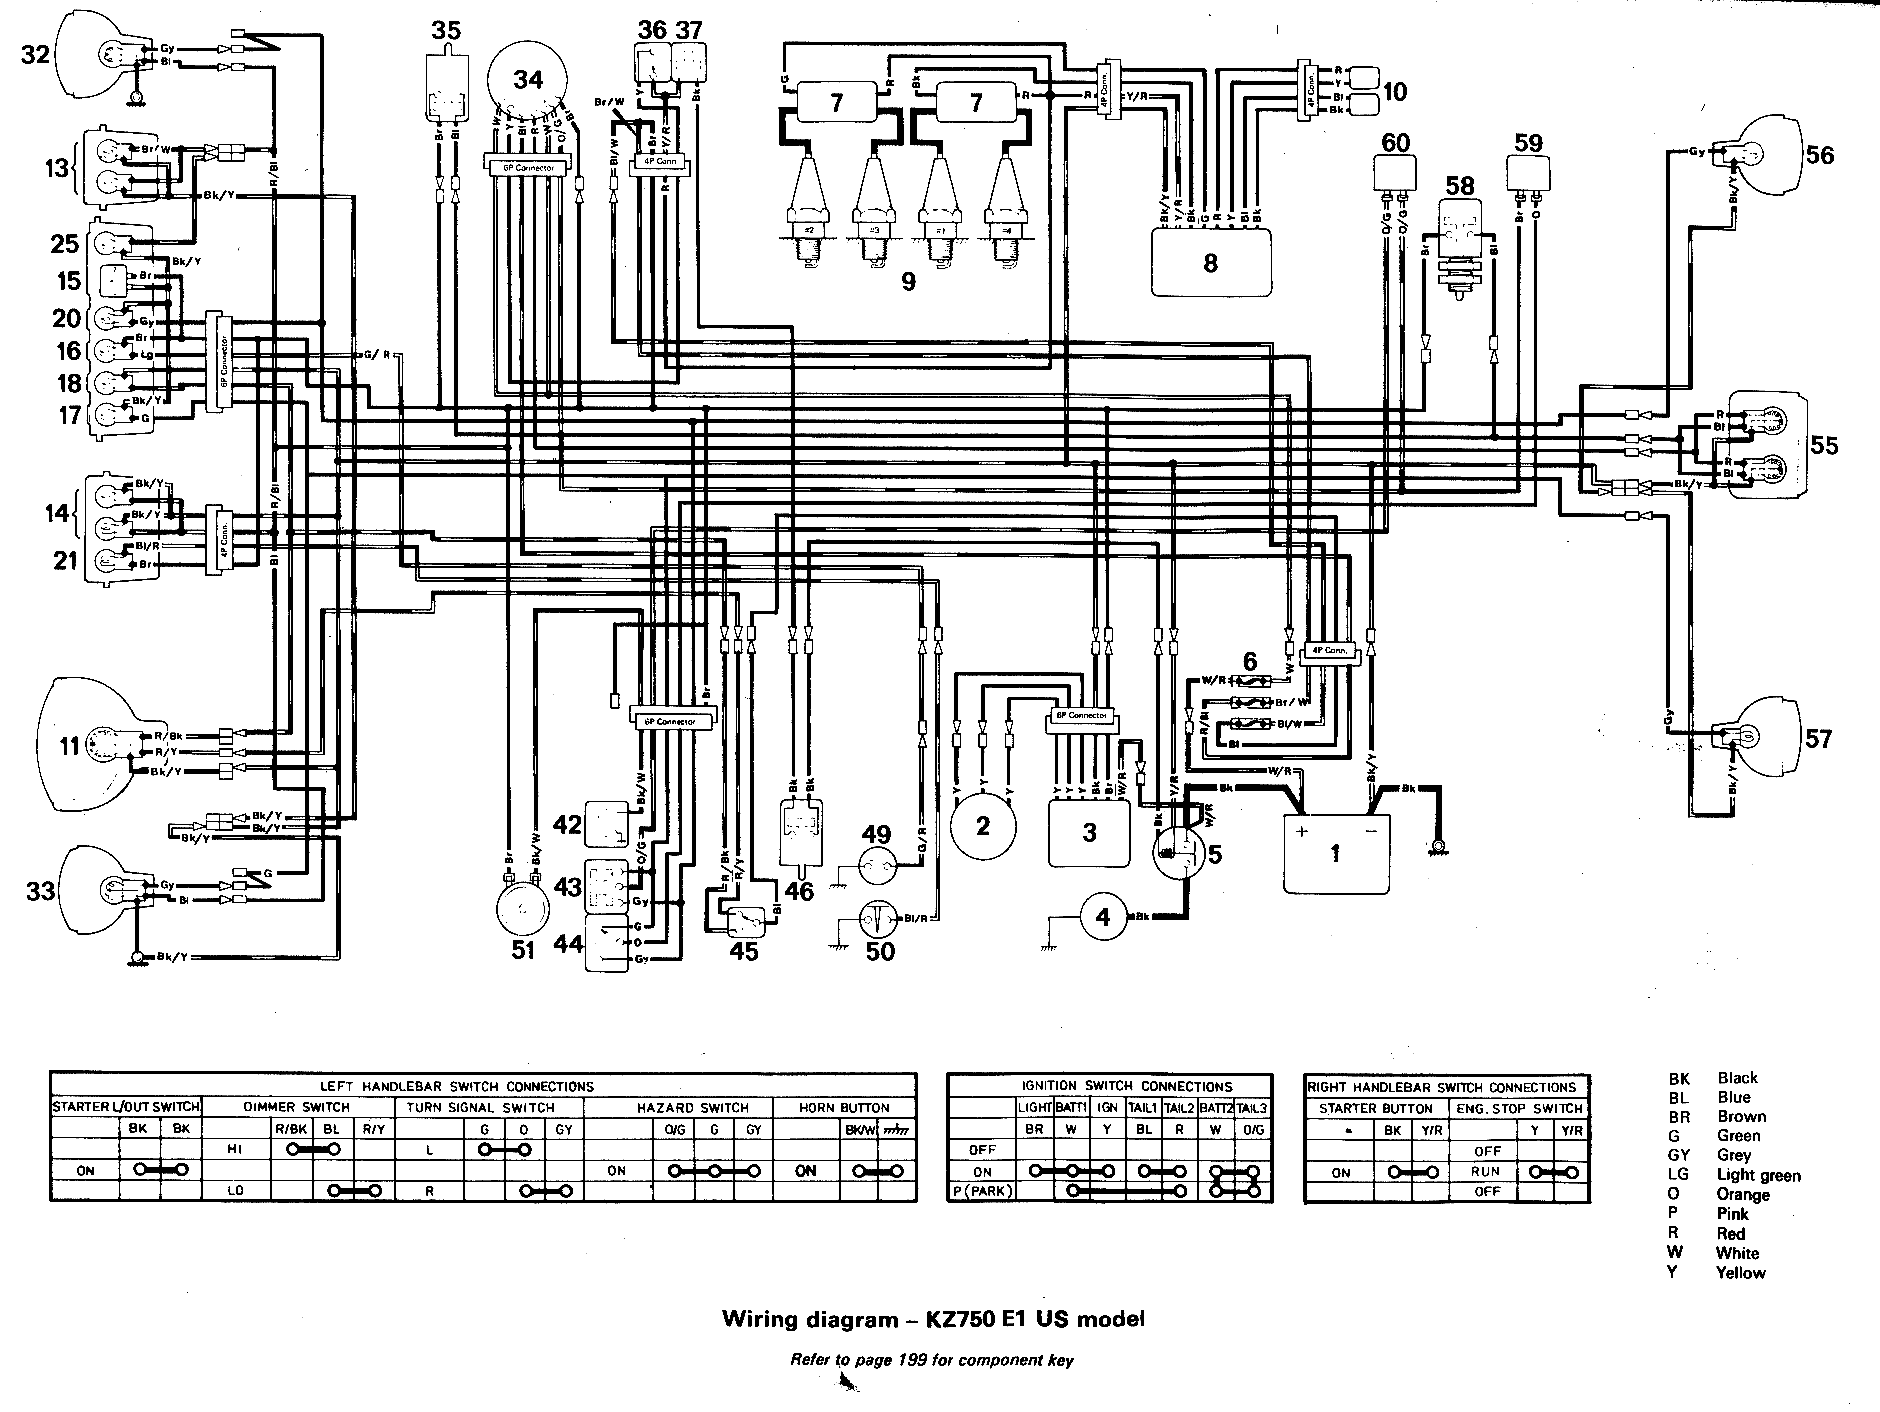 I need wire schematics for 1979 kawasaki kz 750 - Fixya